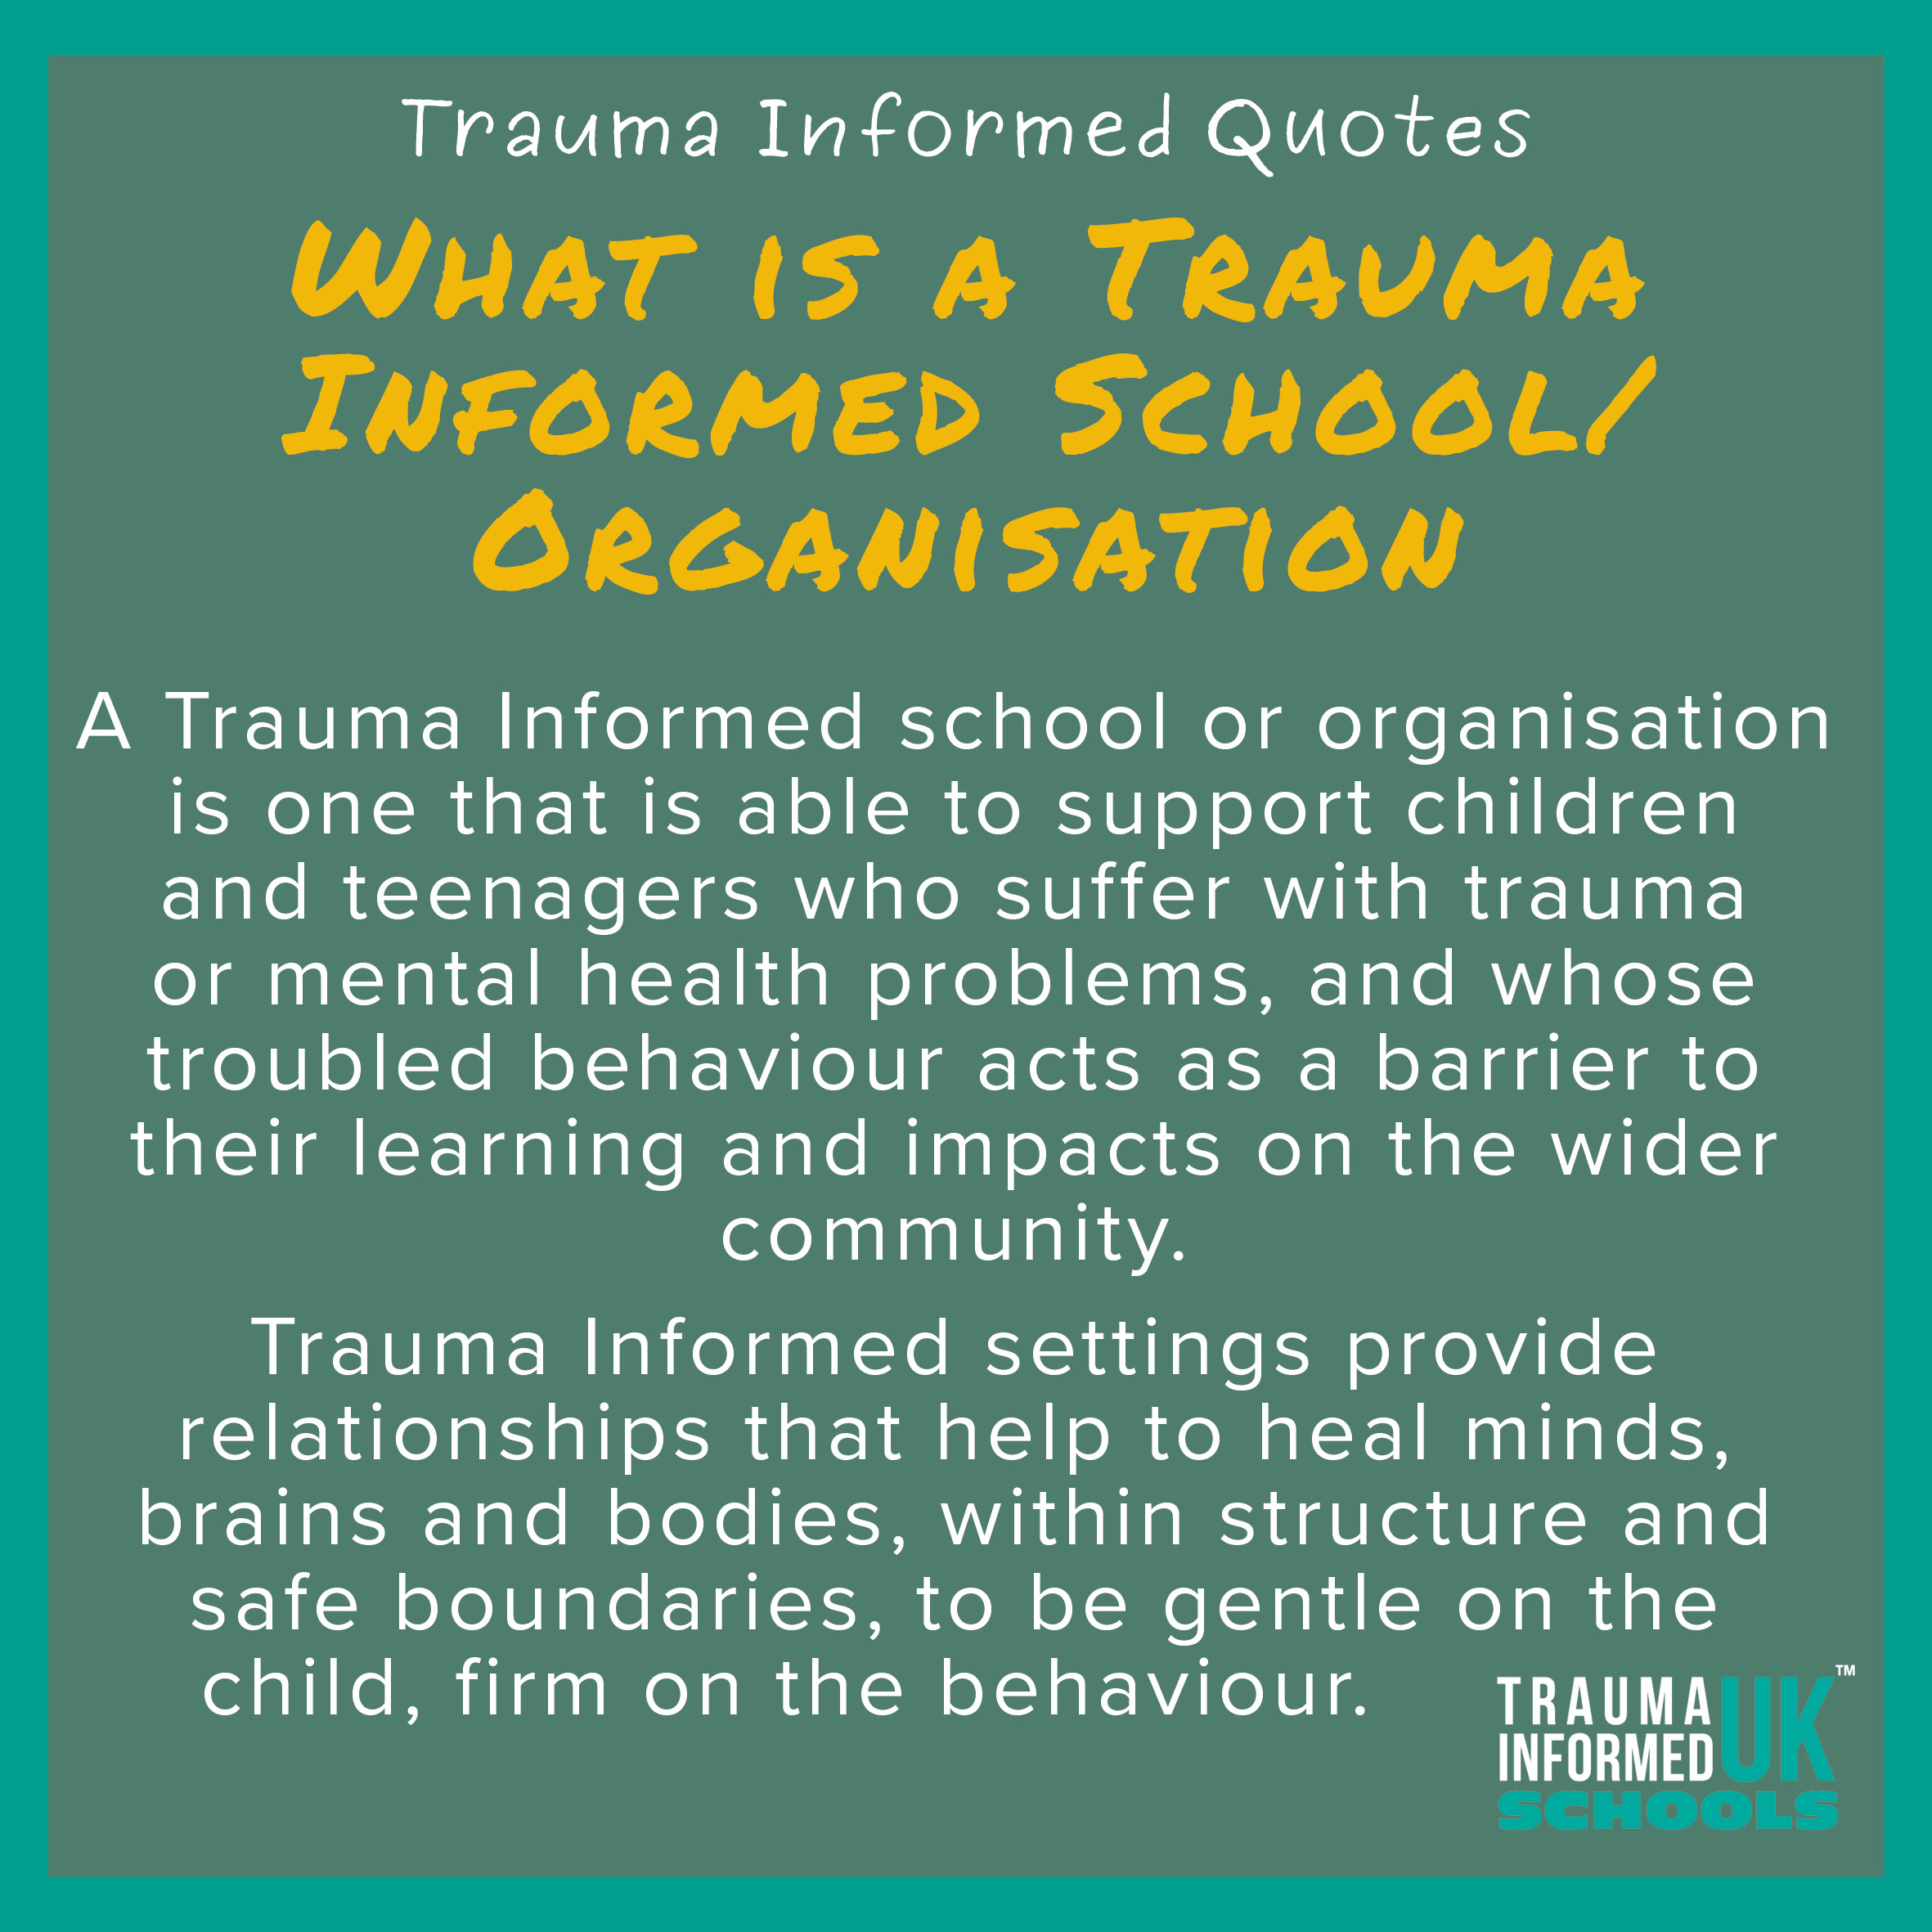 What is a Trauma Informed School